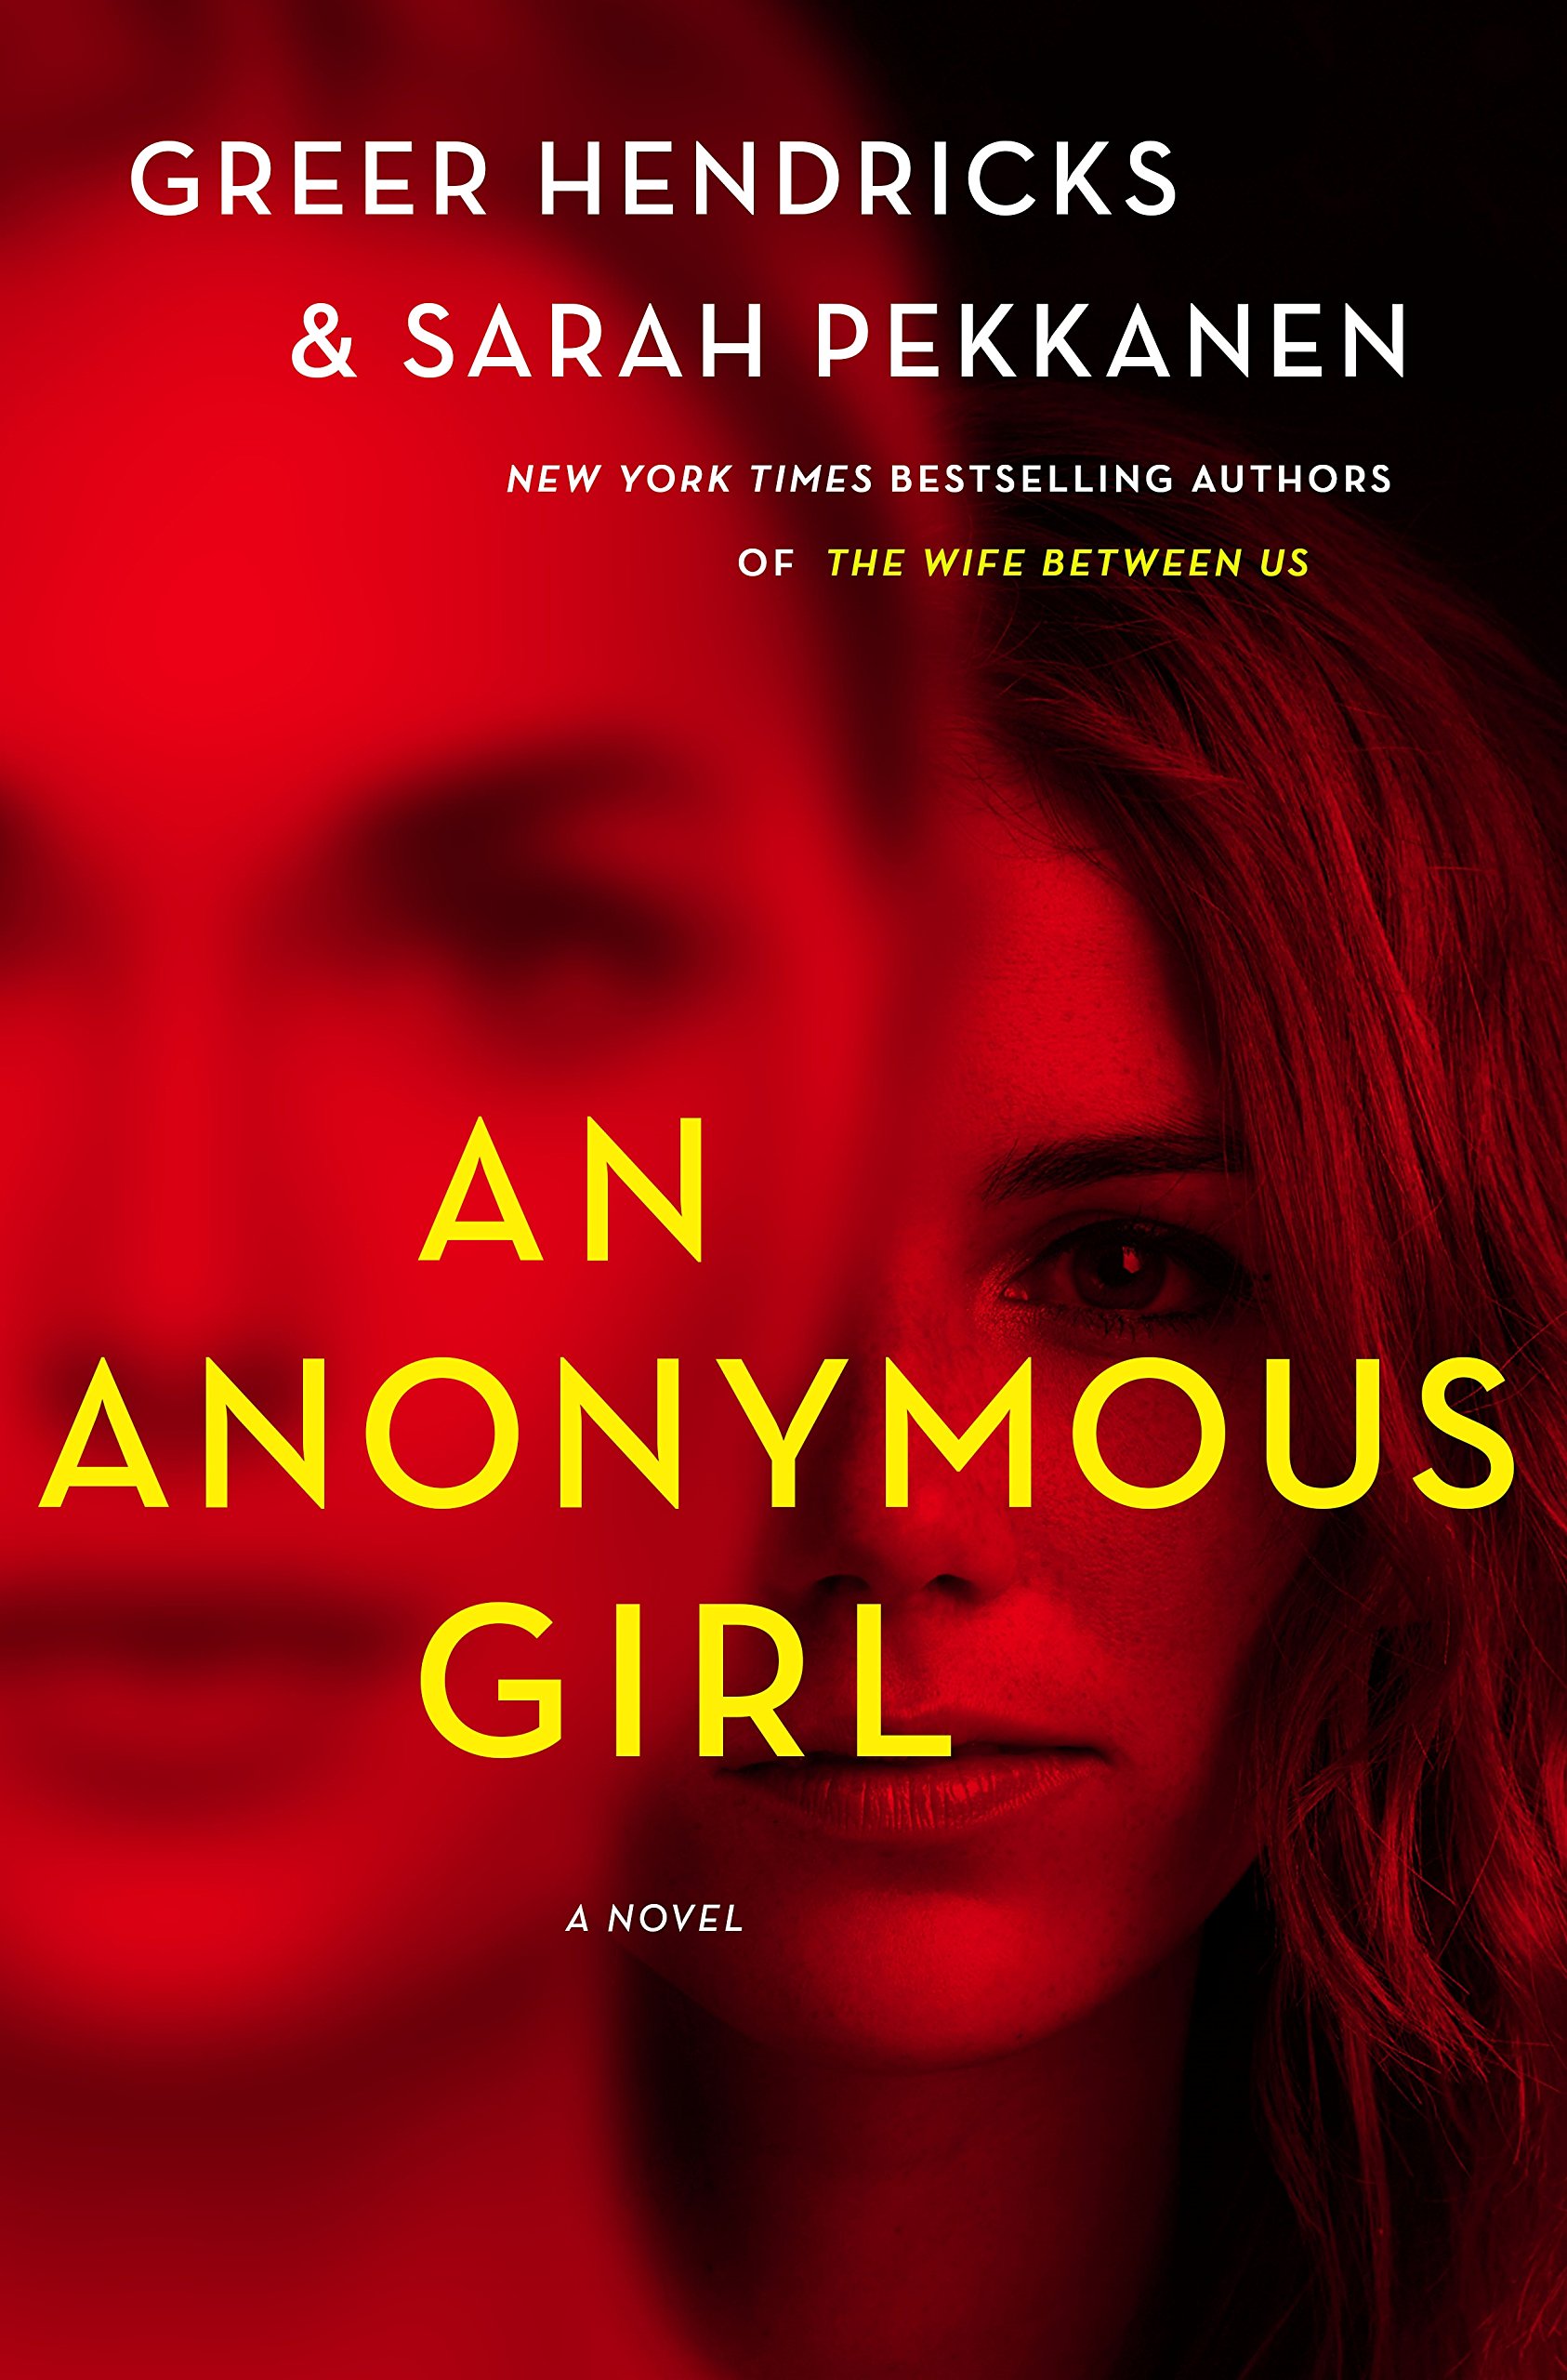 Book Review - An Anonymous Girl by Greer Hendricks and Sarah Pekkanen